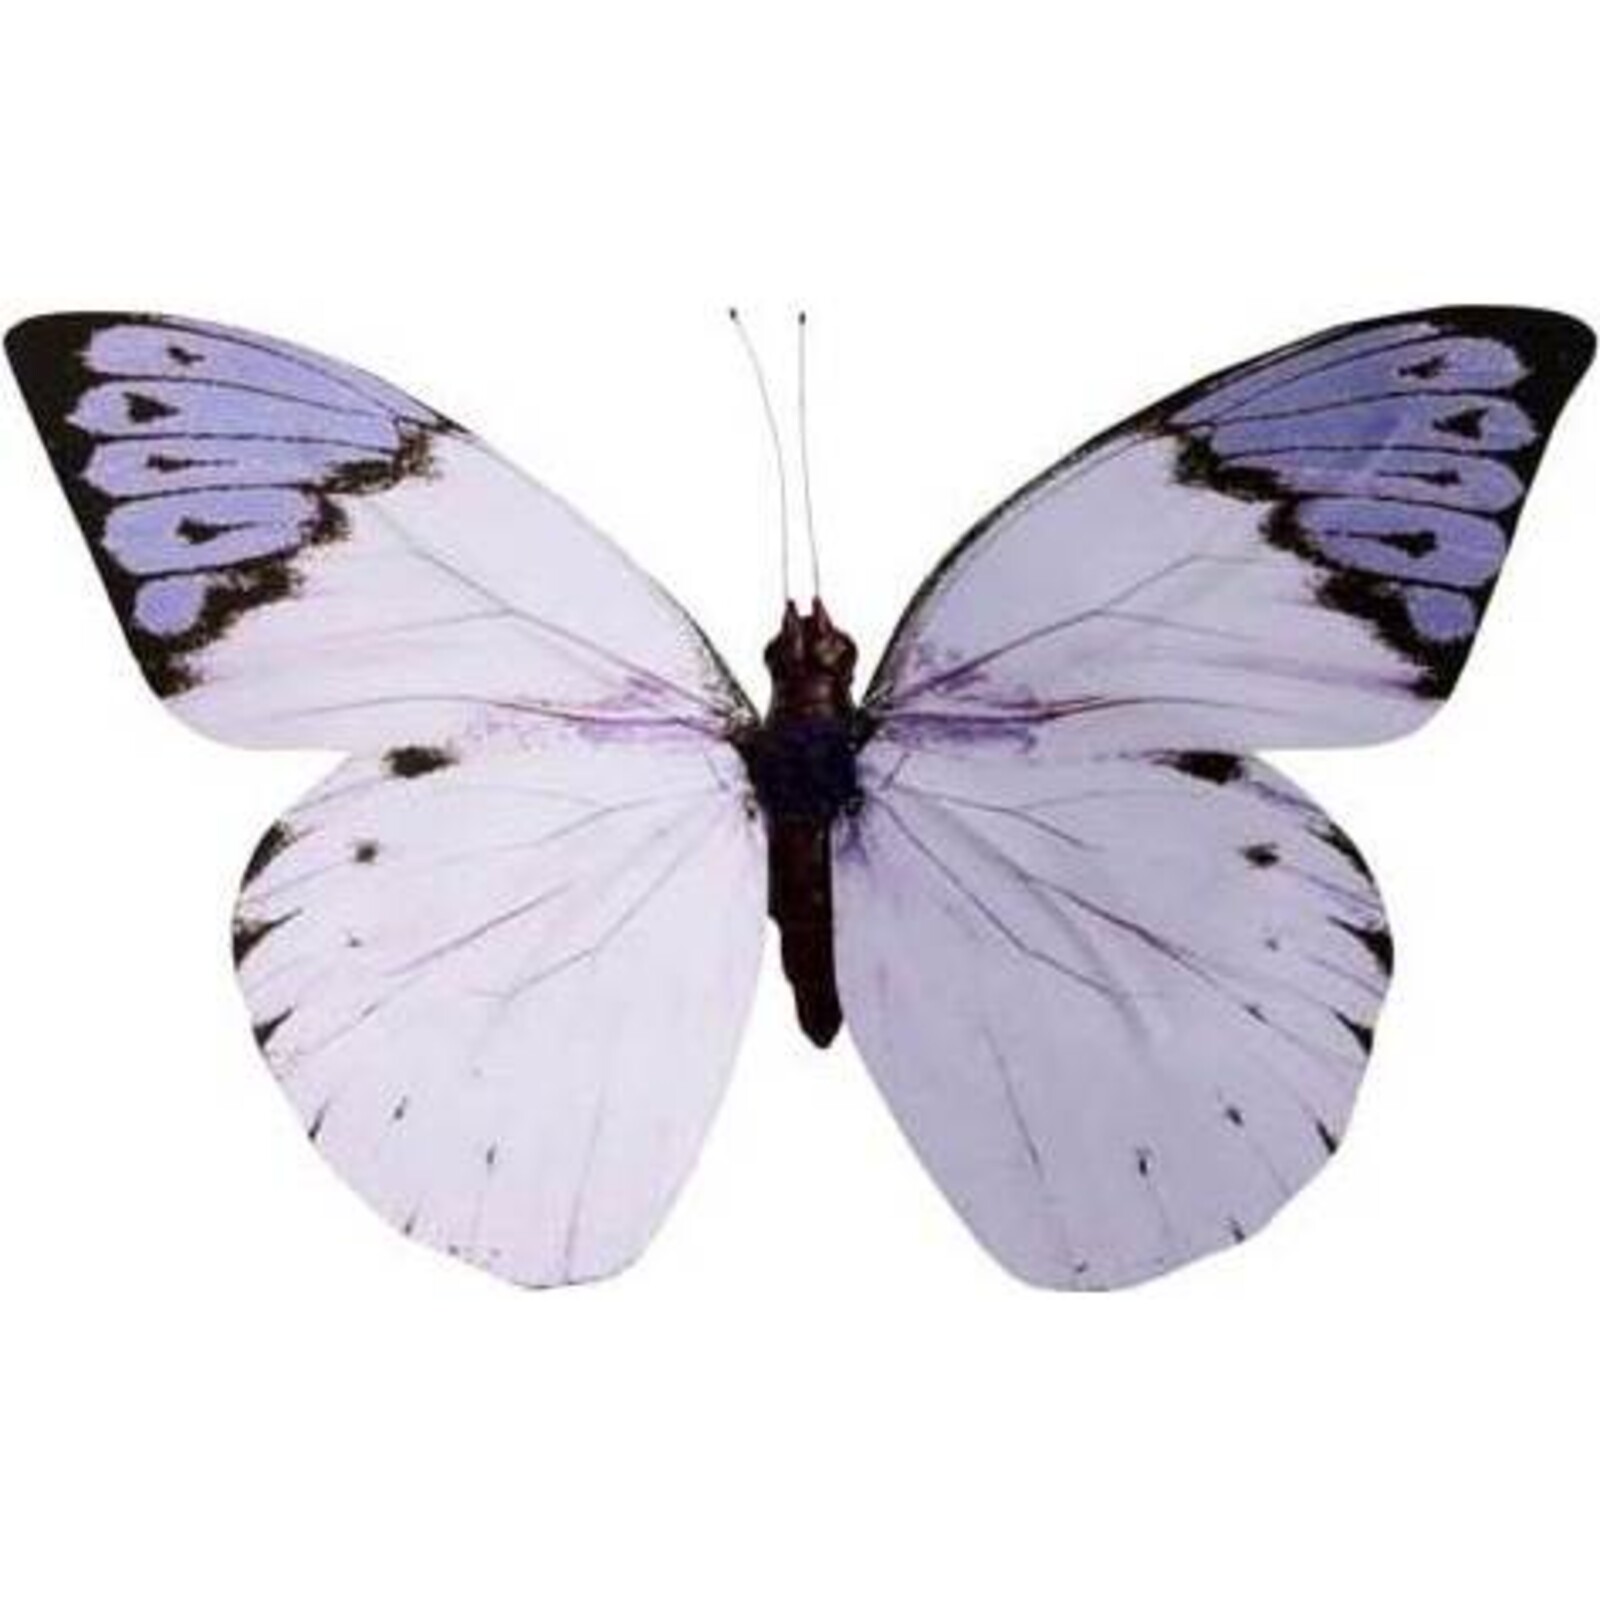  Butterfly Large - Double Purple